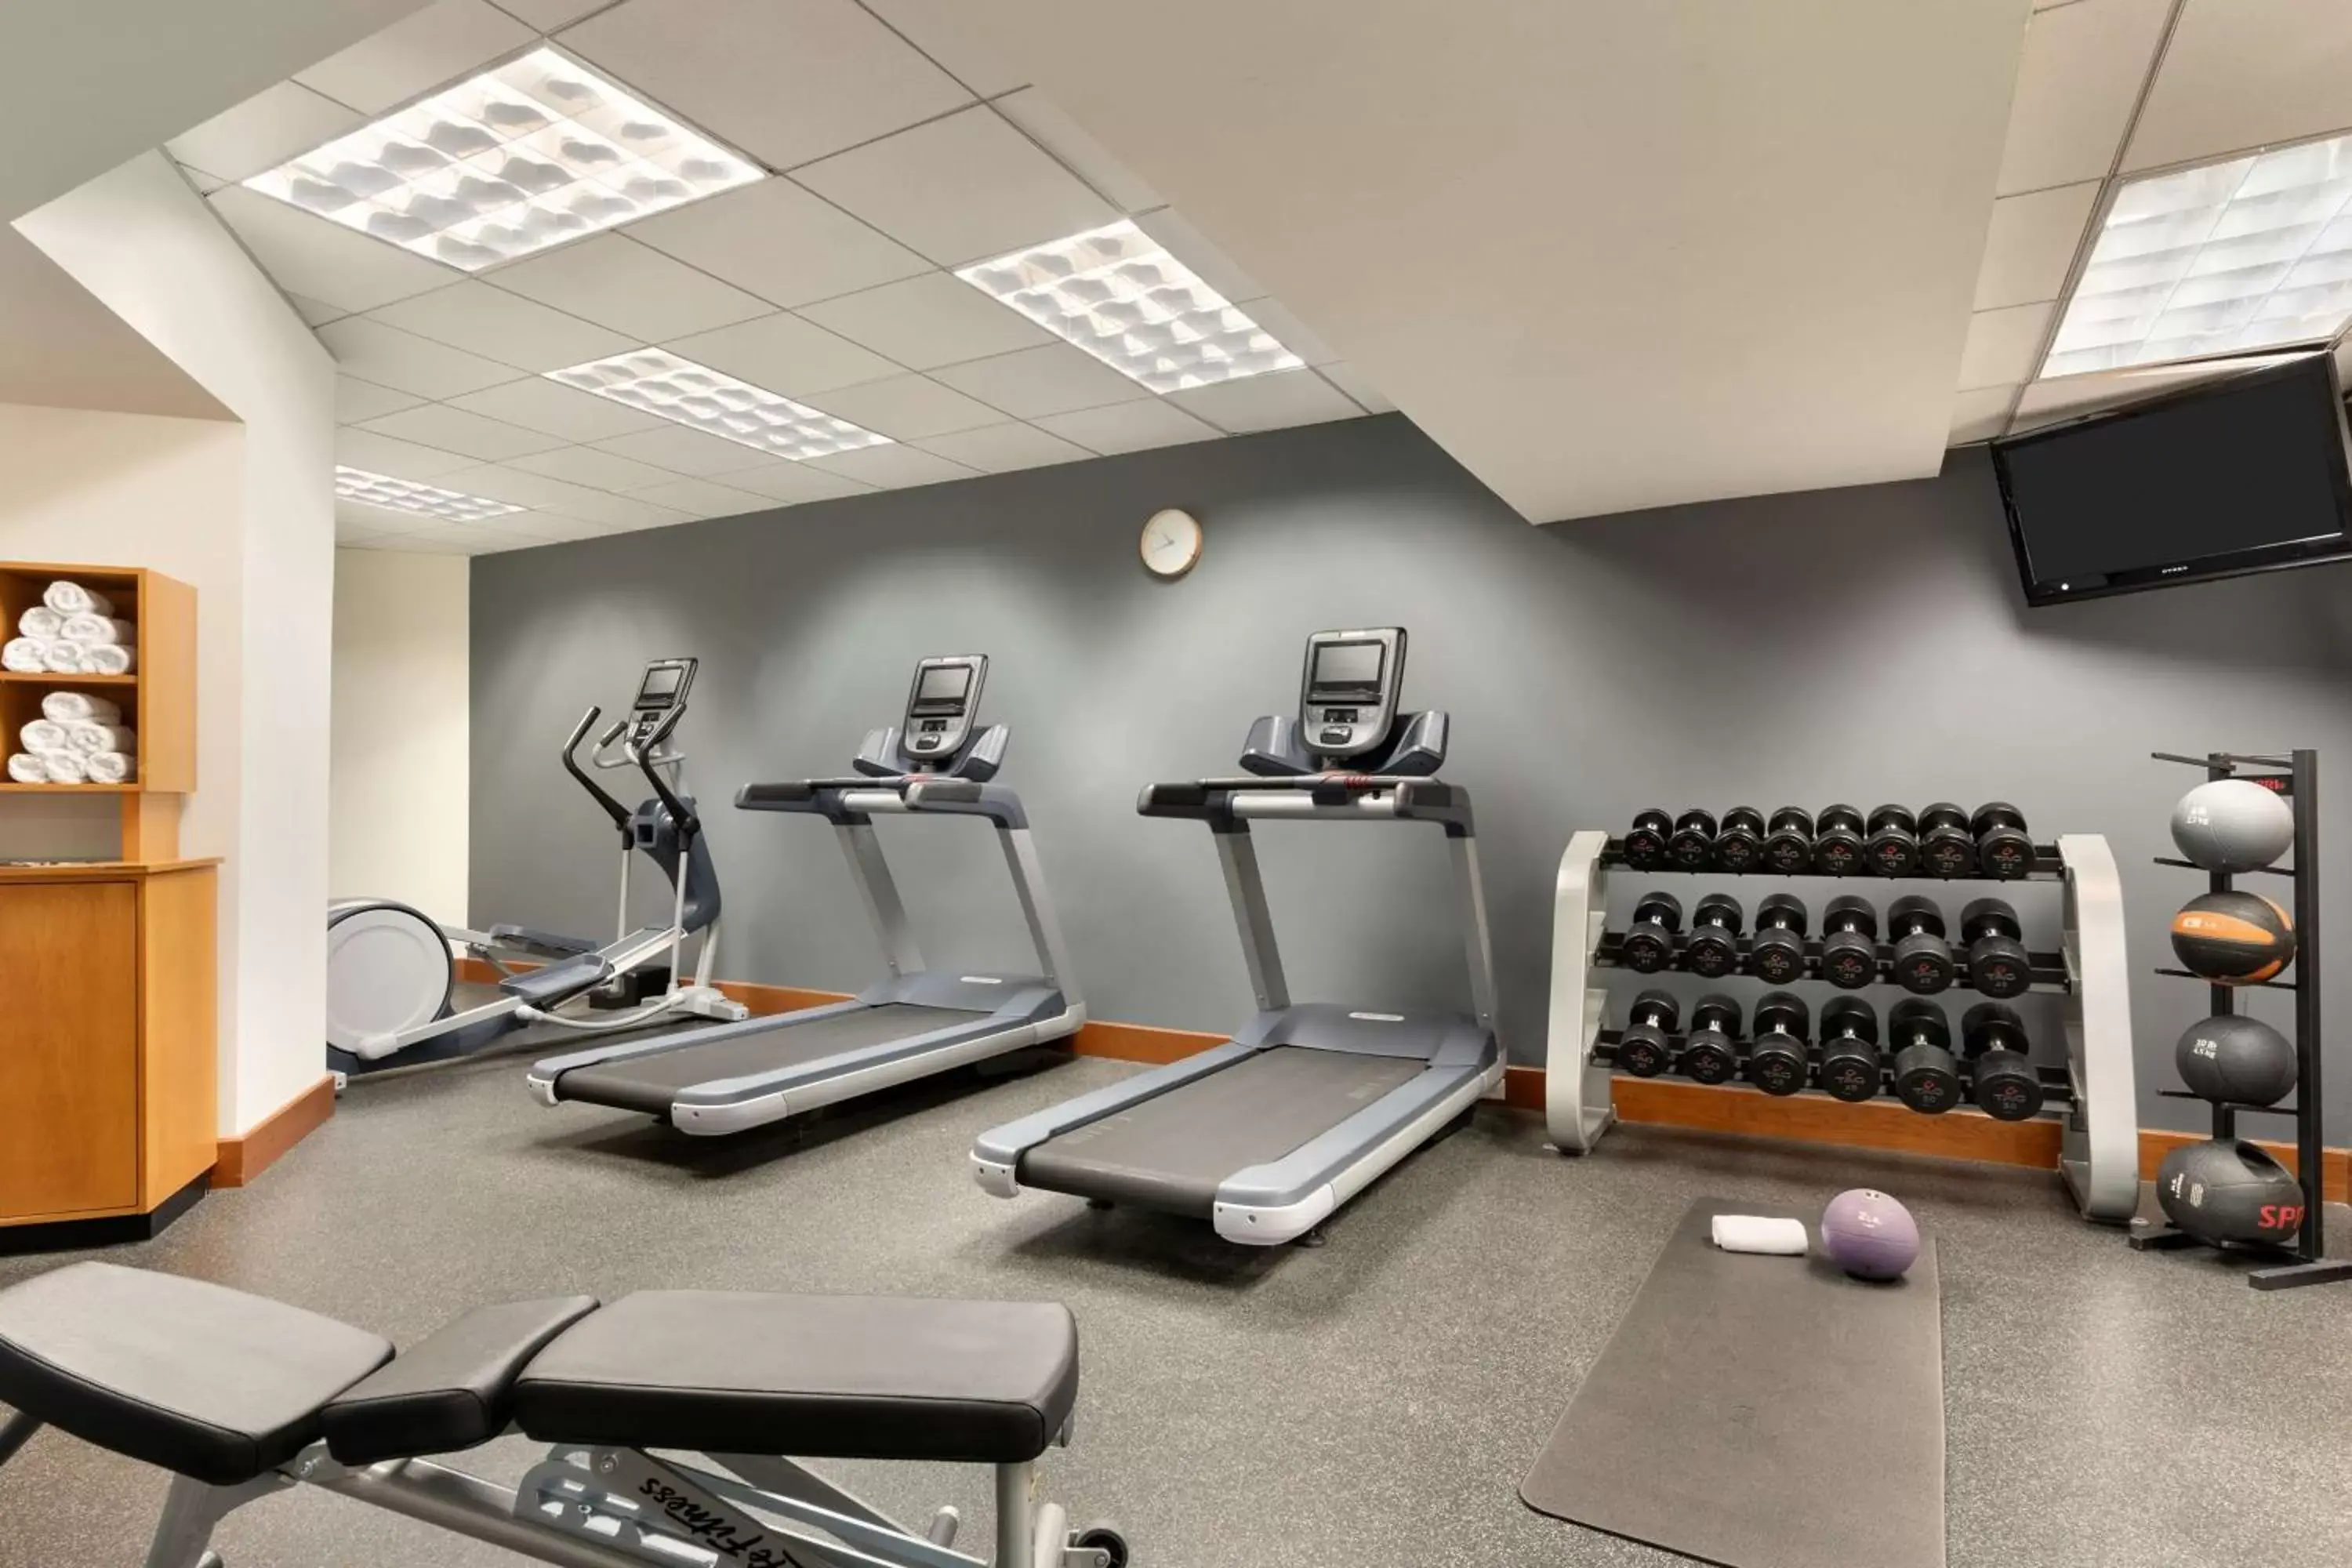 Fitness centre/facilities, Fitness Center/Facilities in Hilton Garden Inn Tysons Corner